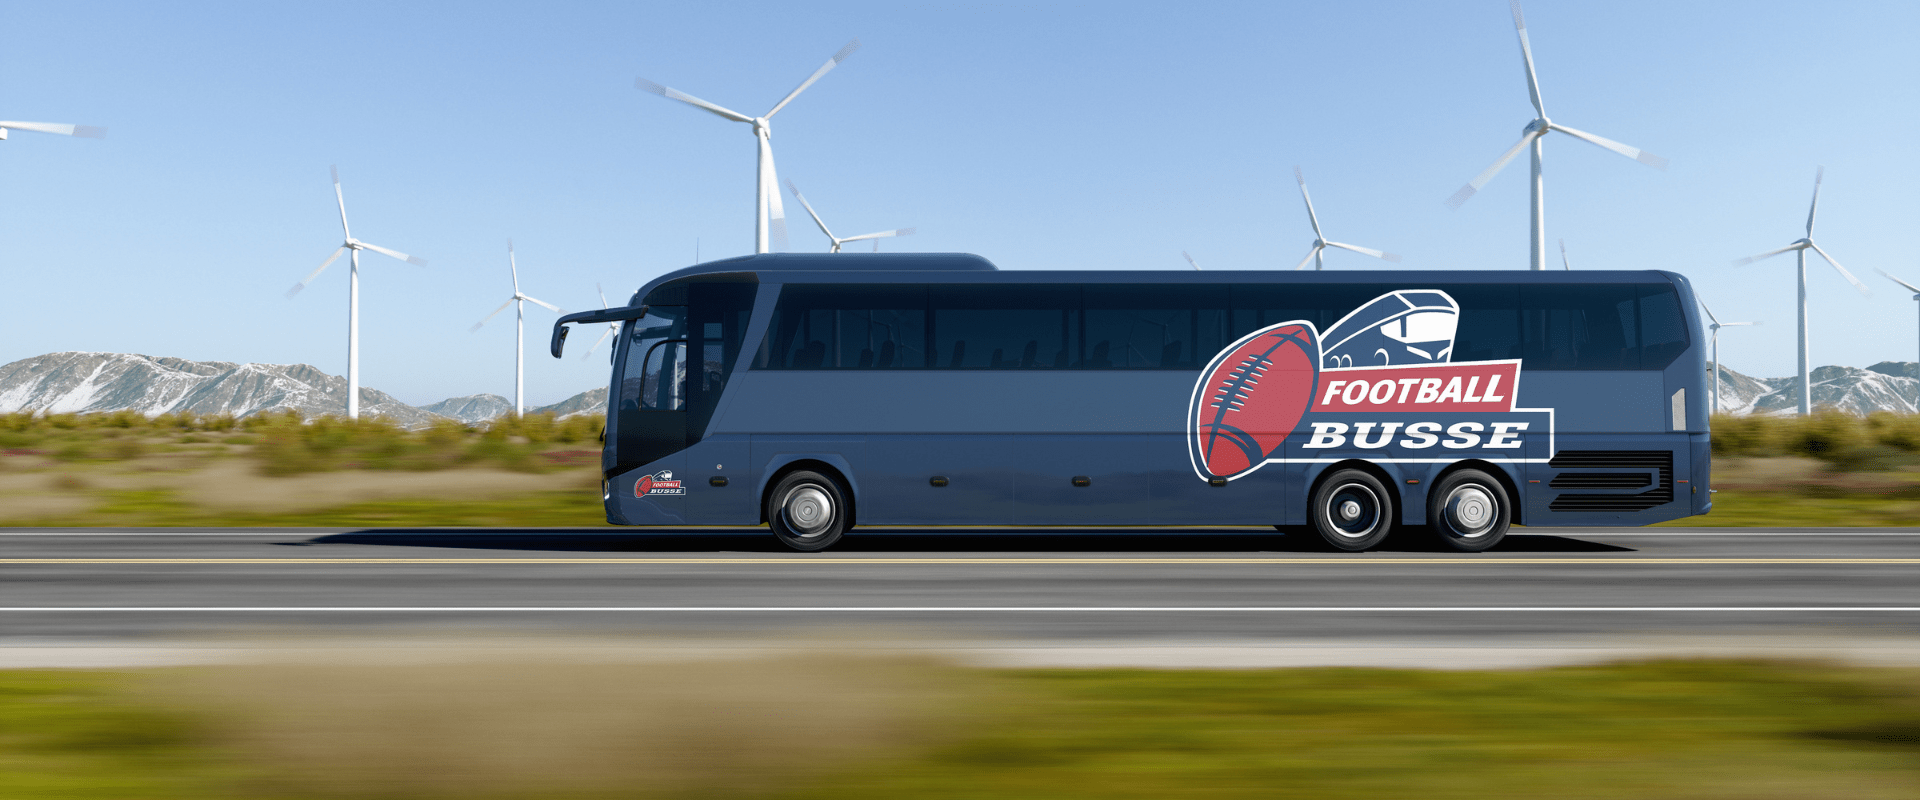 Footballbusse - Komm in unser Team